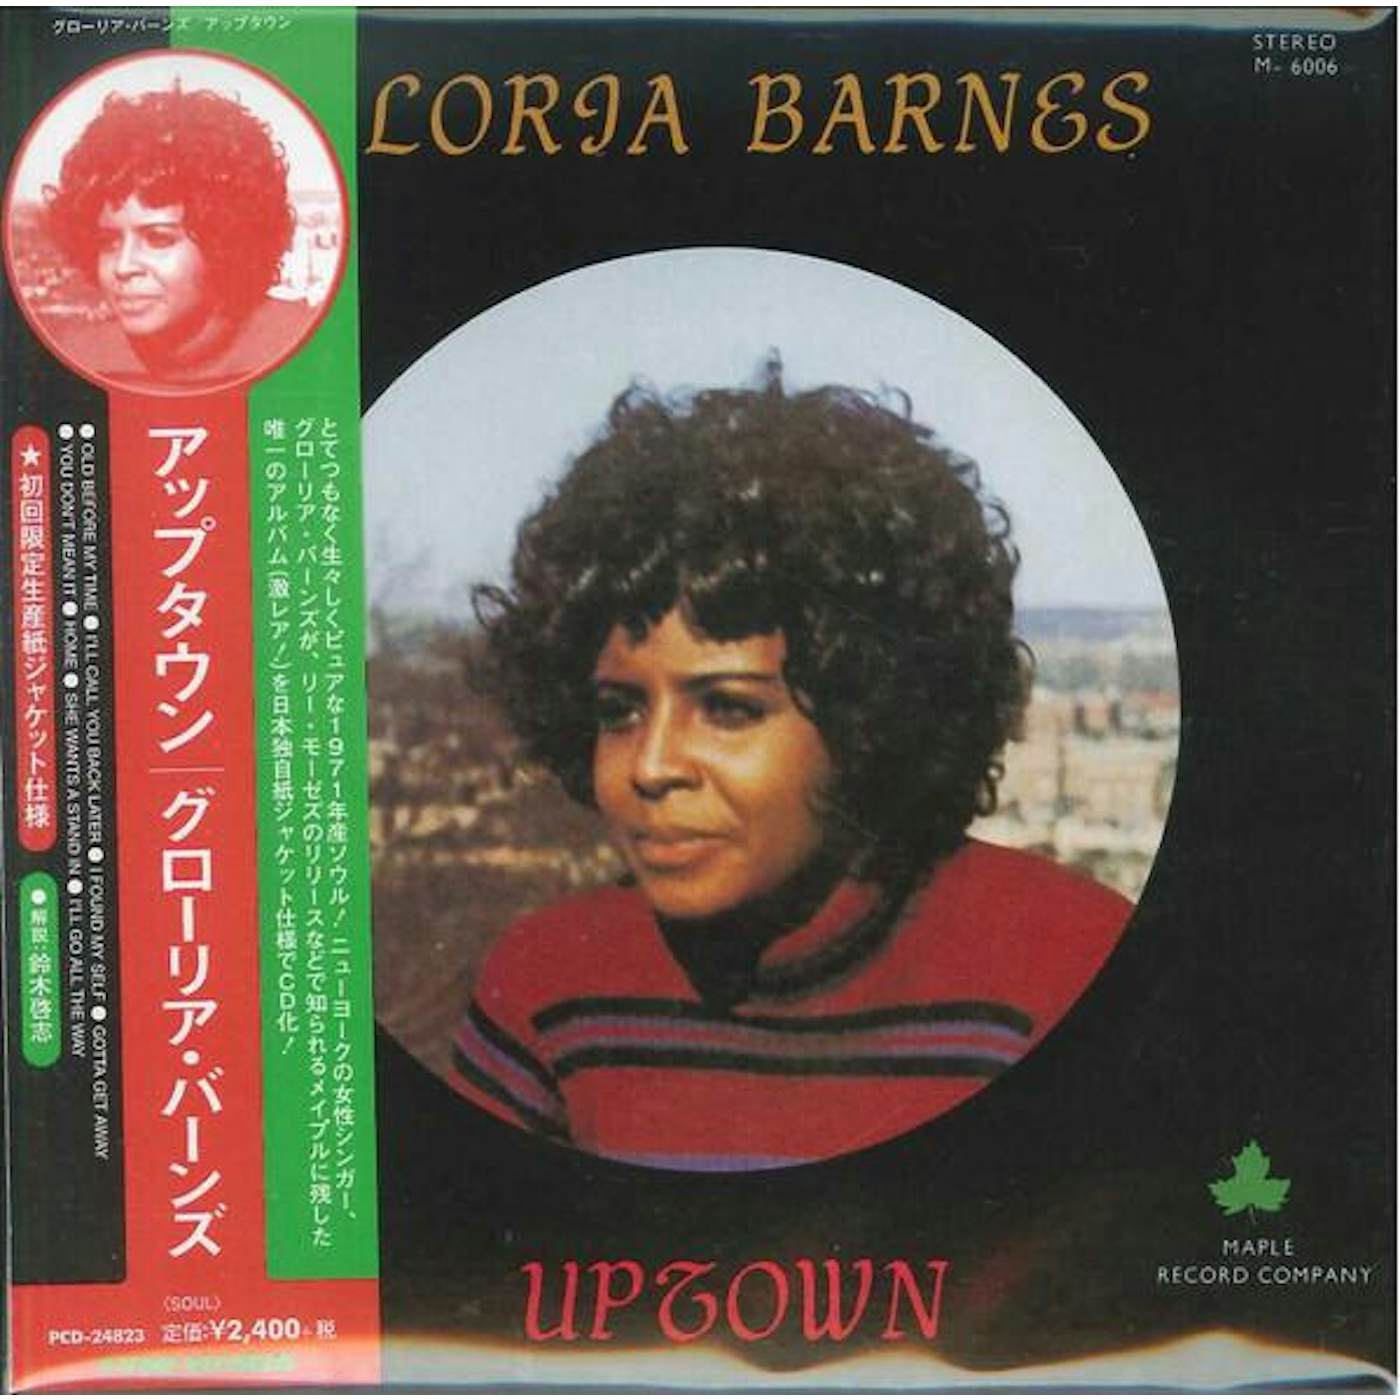 Gloria Barnes UPTOWN CD